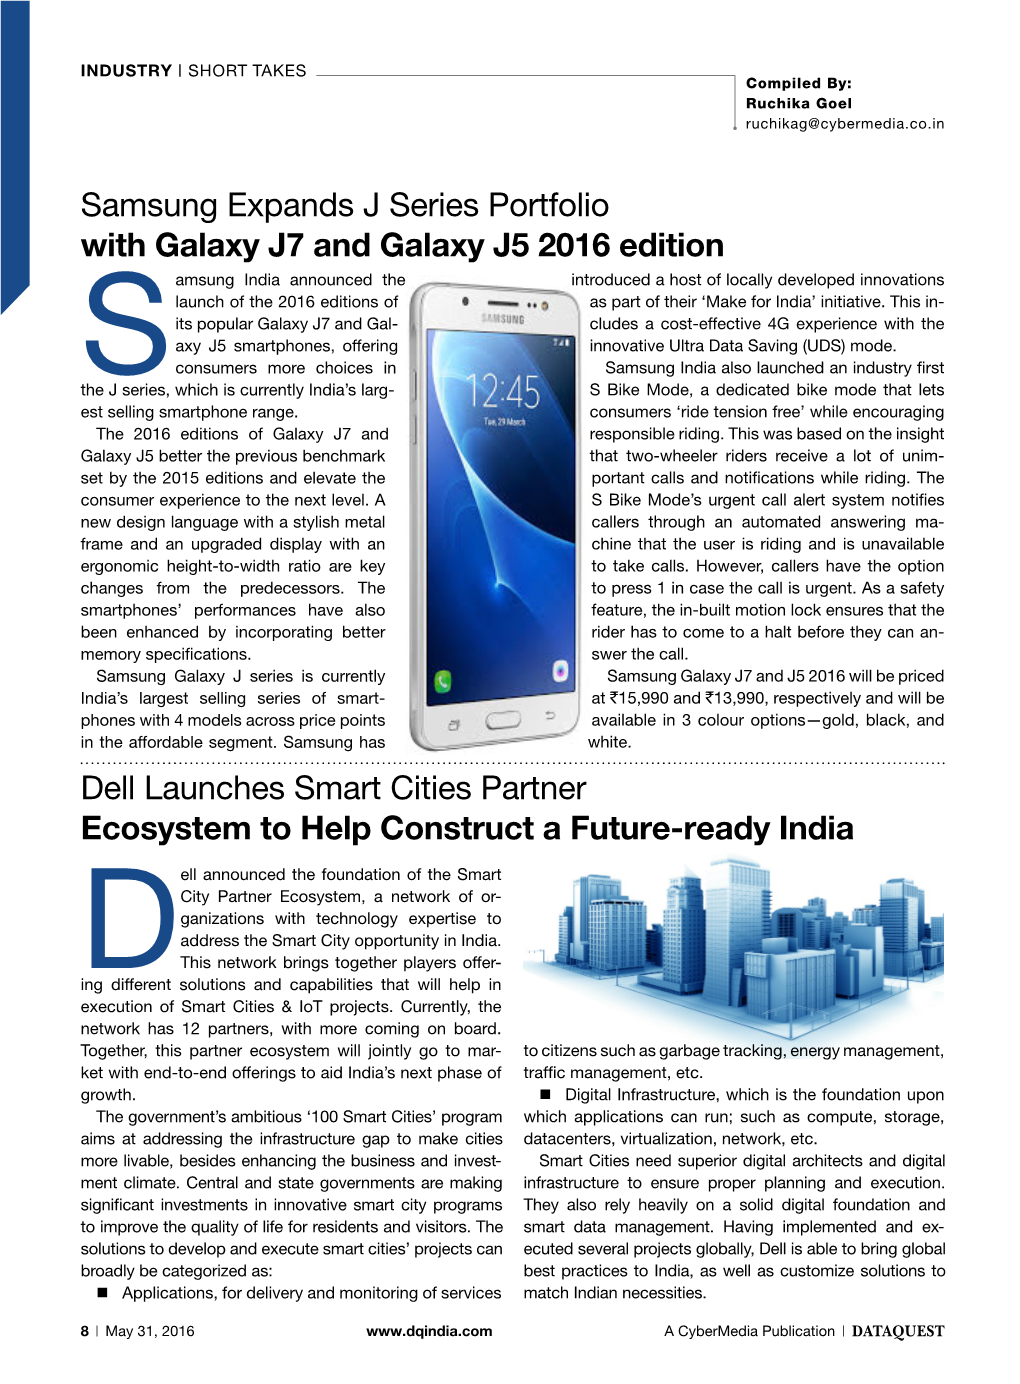 Samsung Expands J Series Portfolio with Galaxy J7 and Galaxy J5 2016